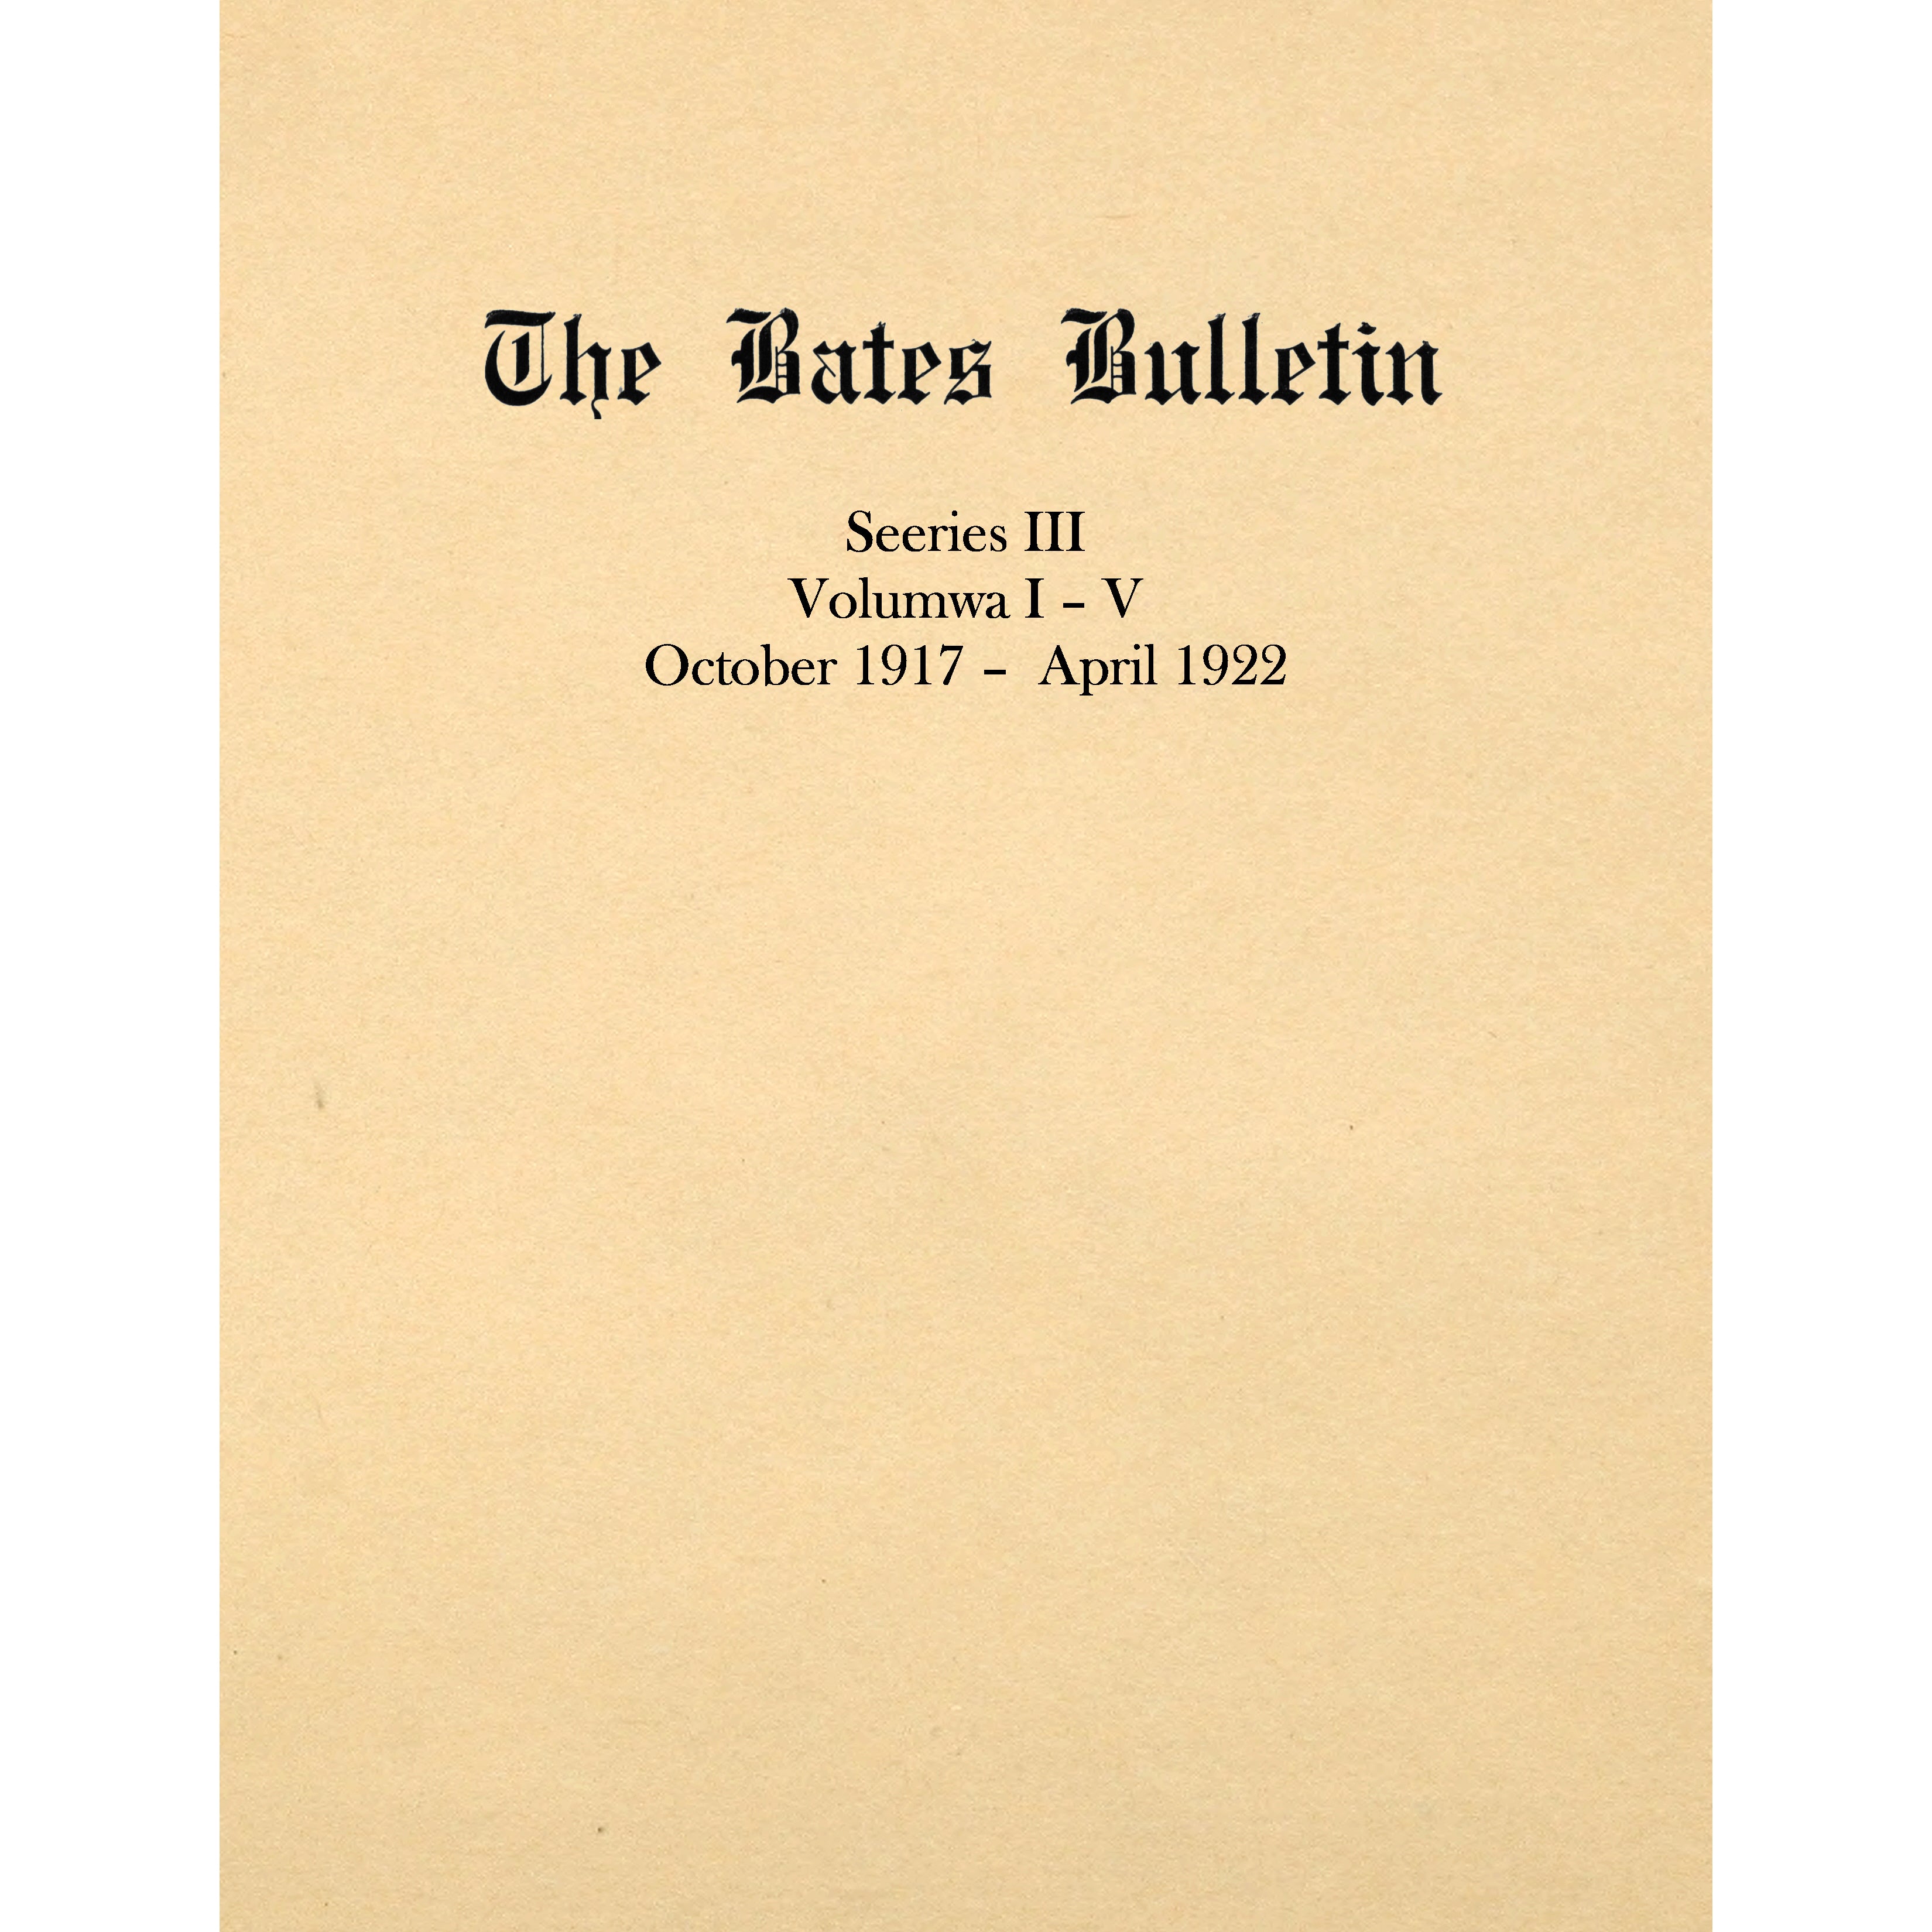 The Bates Bulletin, Series III 1917 -- 1922